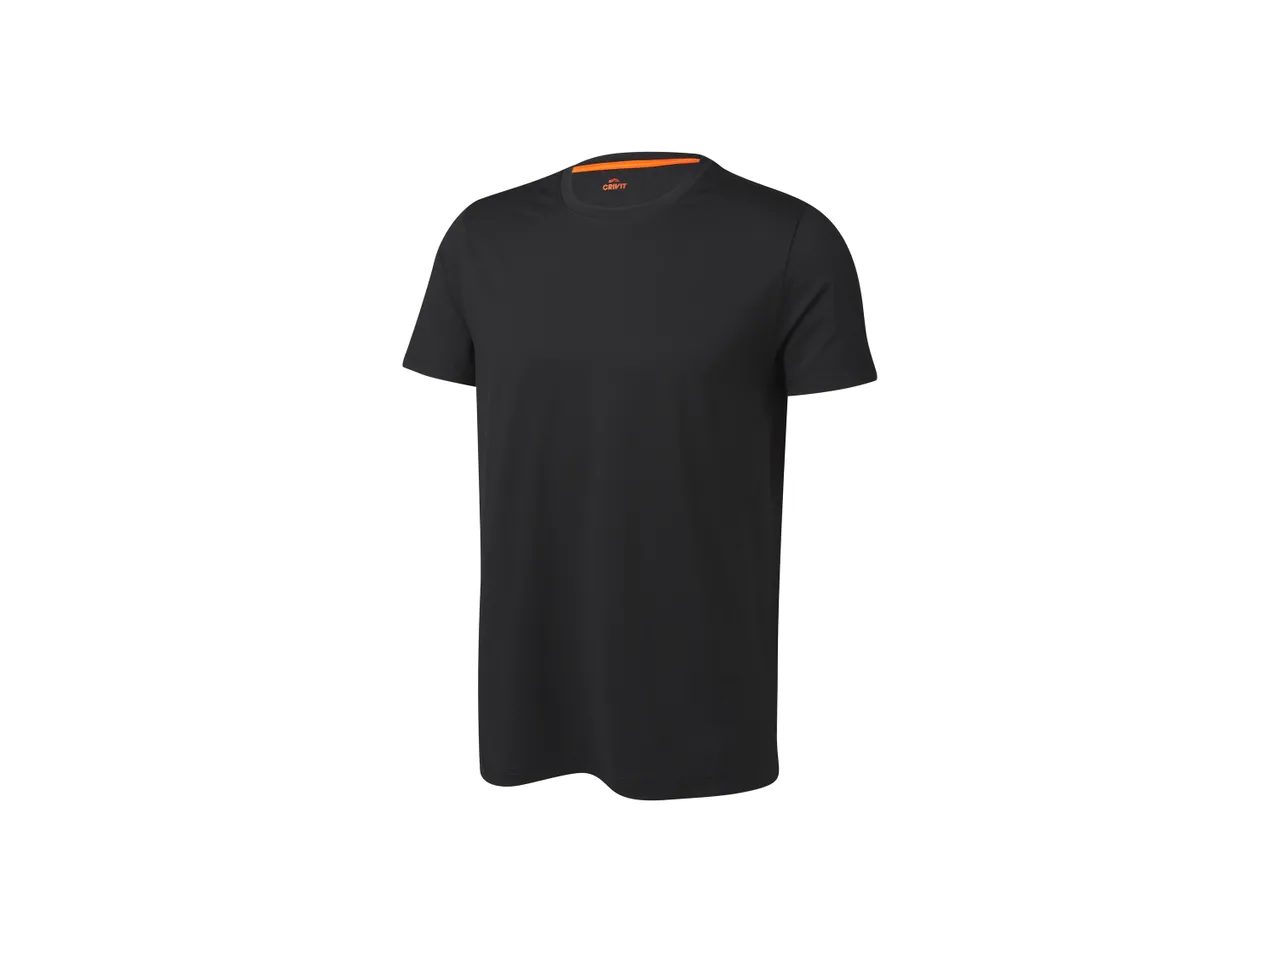 T-shirt sportiva da uomo , prezzo 4,99 EUR 
T-shirt sportiva da uomo Misure: M-XL ...